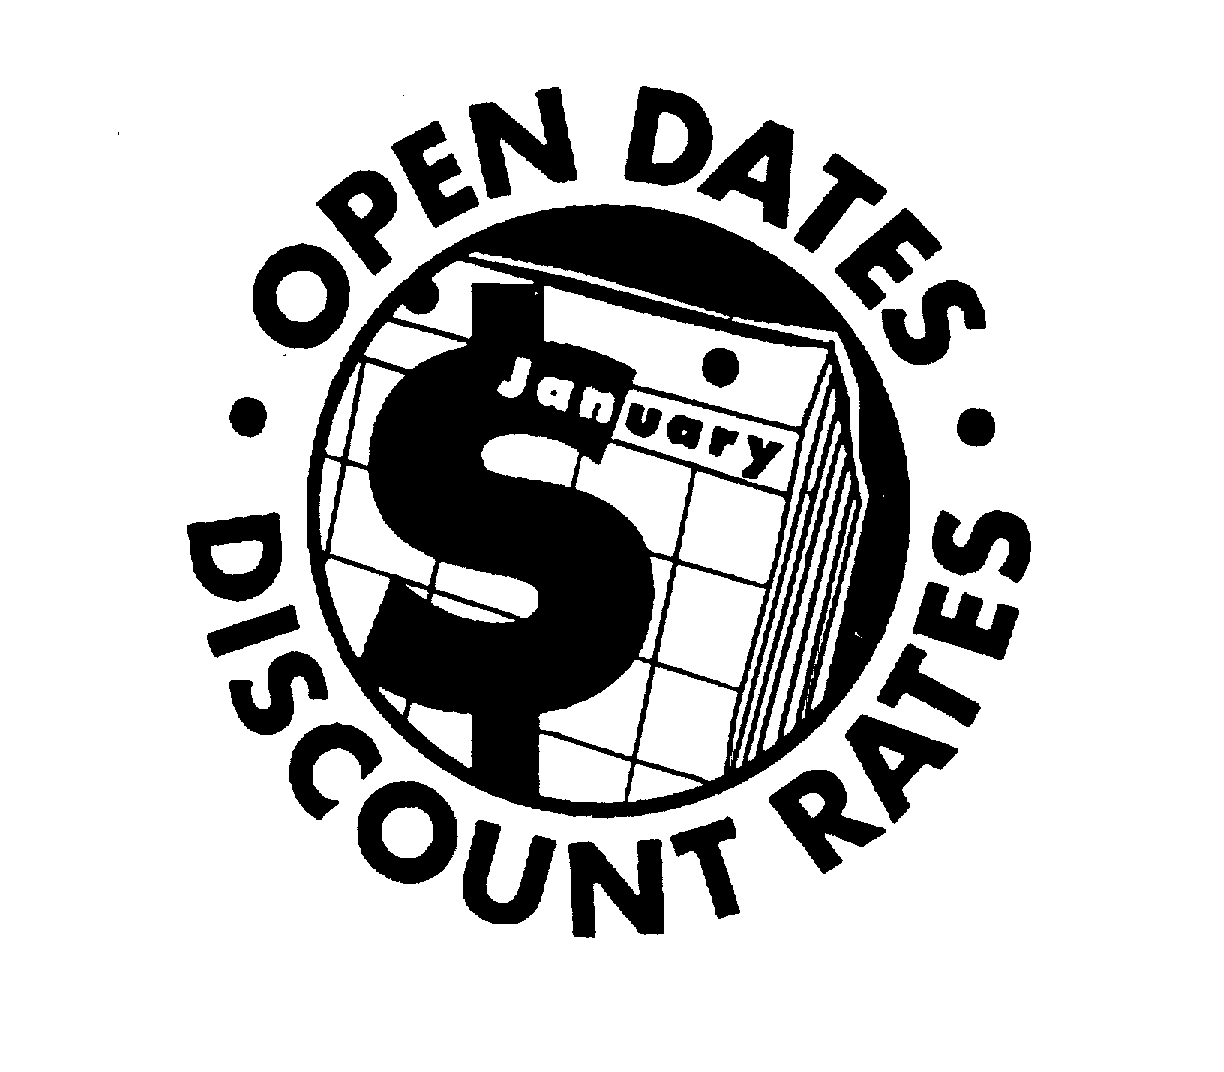  OPEN DATES DISCOUNT RATES